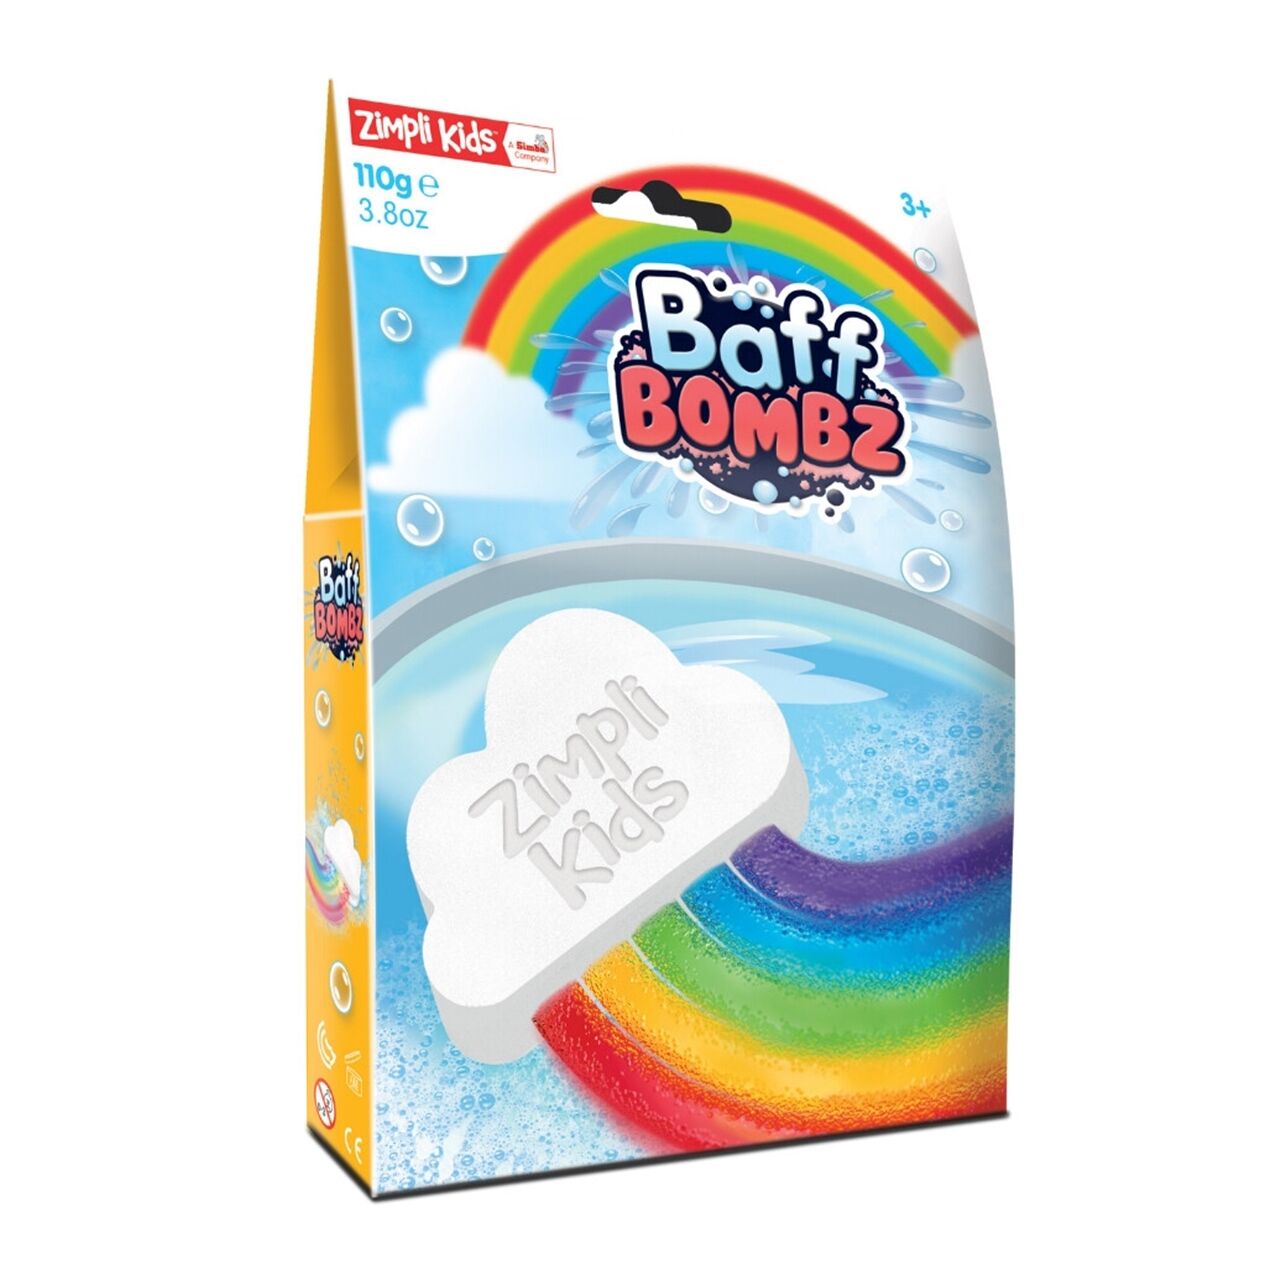 Special Effect Baff Bombz - Rainbow